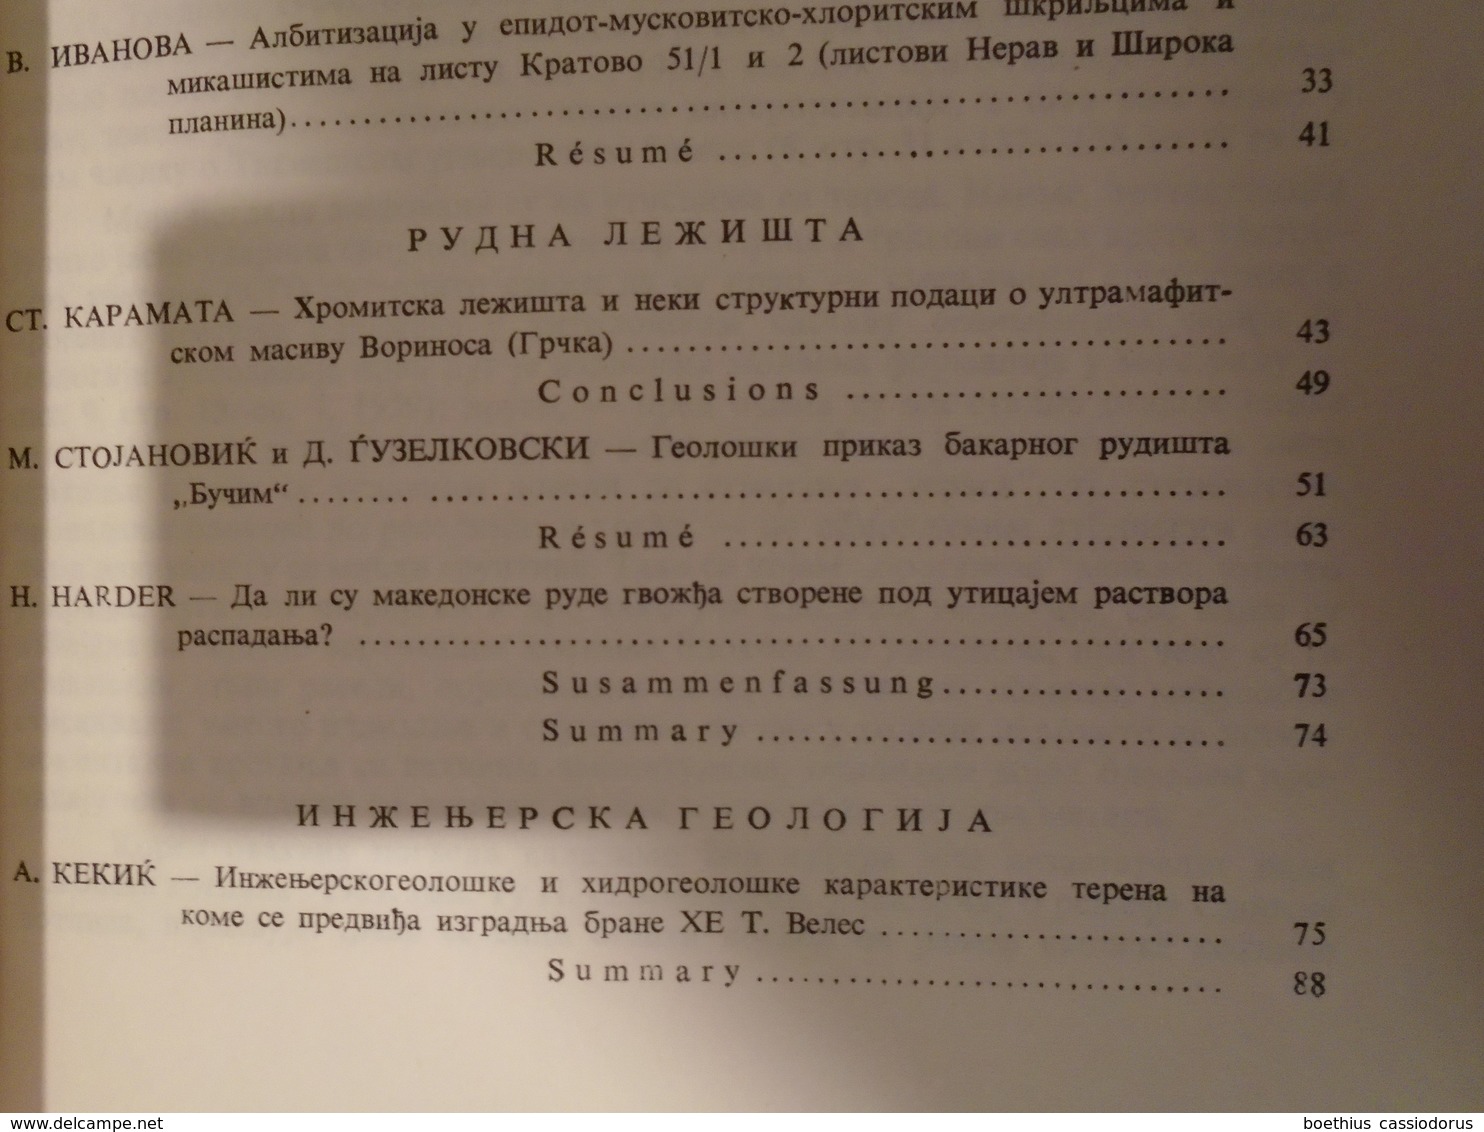 Macedoine : BULLETIN GEOLOGIQUE DE LA REPUBLIQUE SOCIALISTIQUE MACEDONIENNE   FASC 12 / 1965 / SKOPJE - Idiomas Eslavos